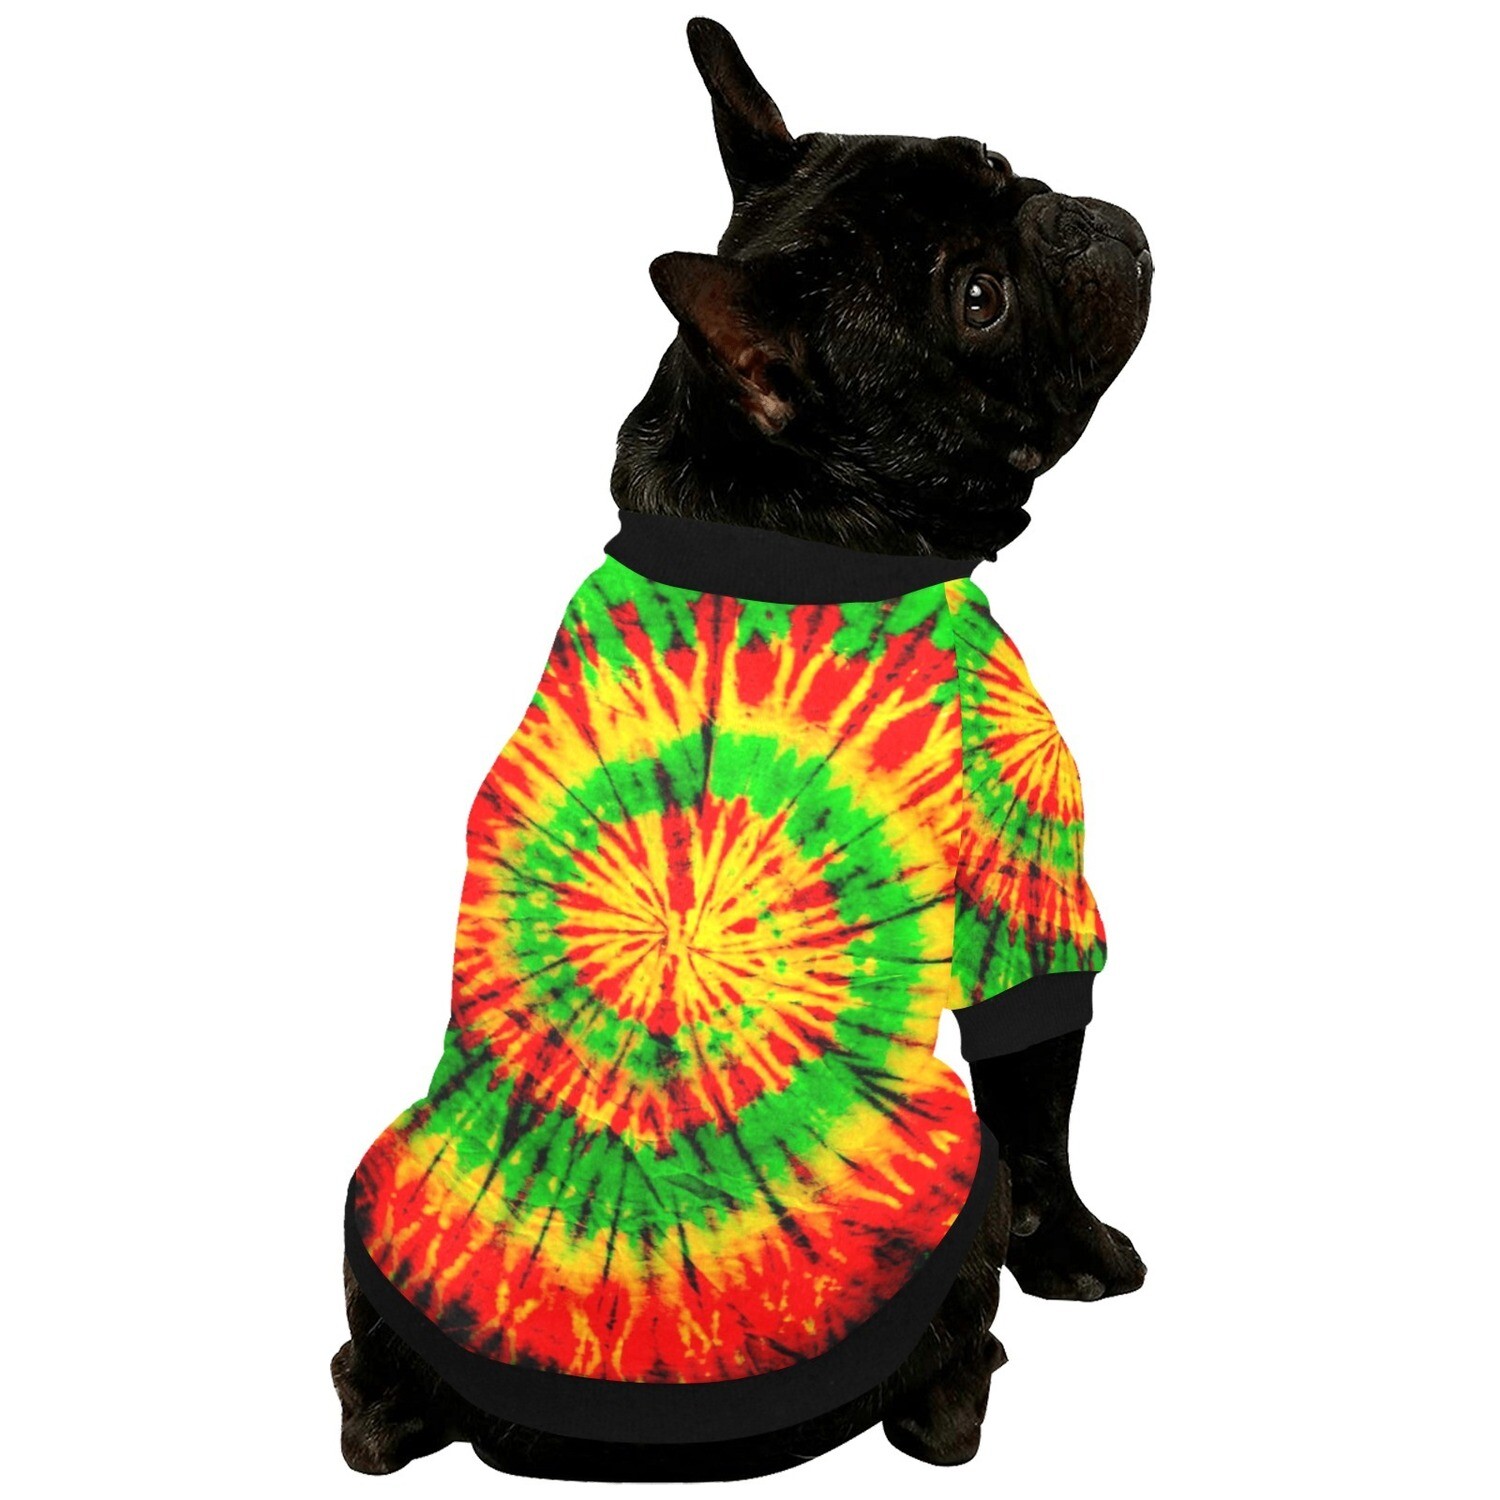 🐕☮︎ Dog Sweatshirt rasta Tie dye, Hippie, Fuzzy warm buttoned Dog Sweater, Dog clothes, Dog clothing, 6 sizes XS to 2XL, Gift for dogs